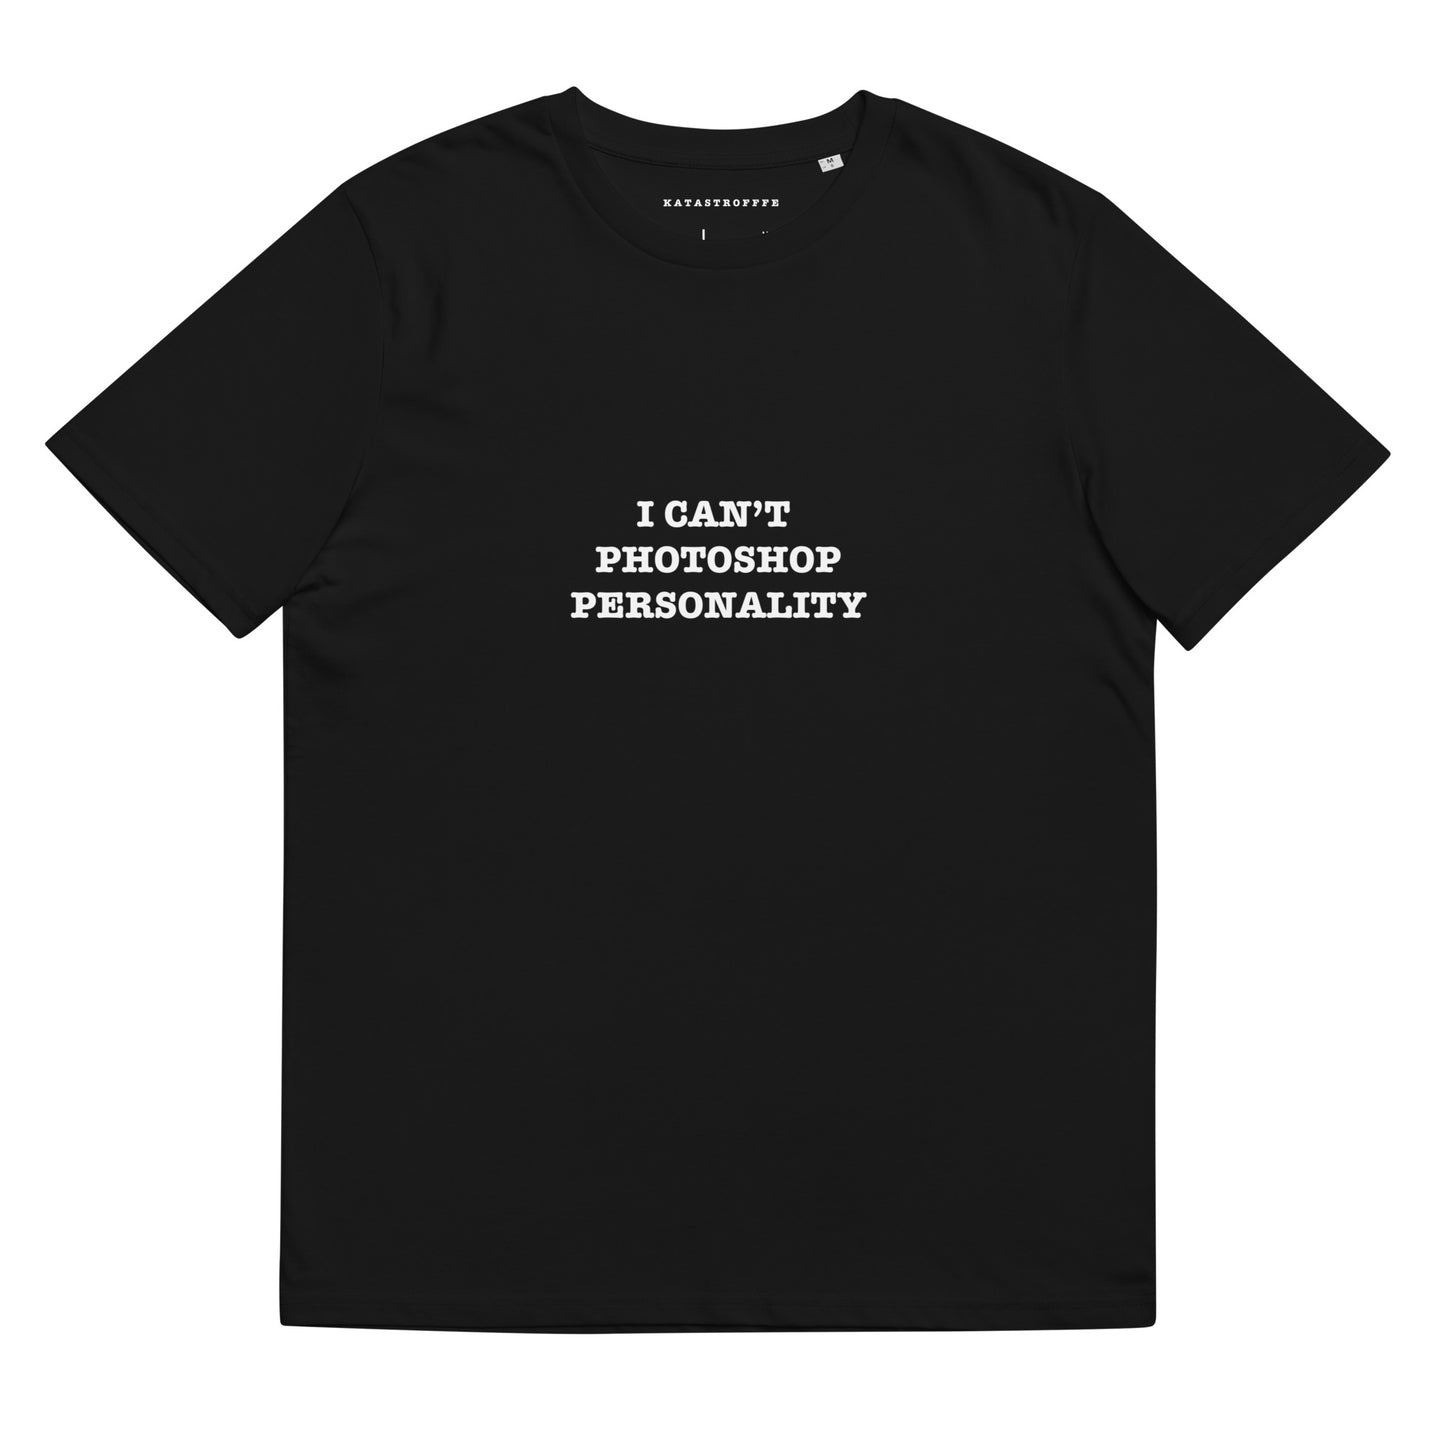 I CANT PHOTOSHOP PERSONALITY Katastrofffe Unisex organic cotton t-shirt